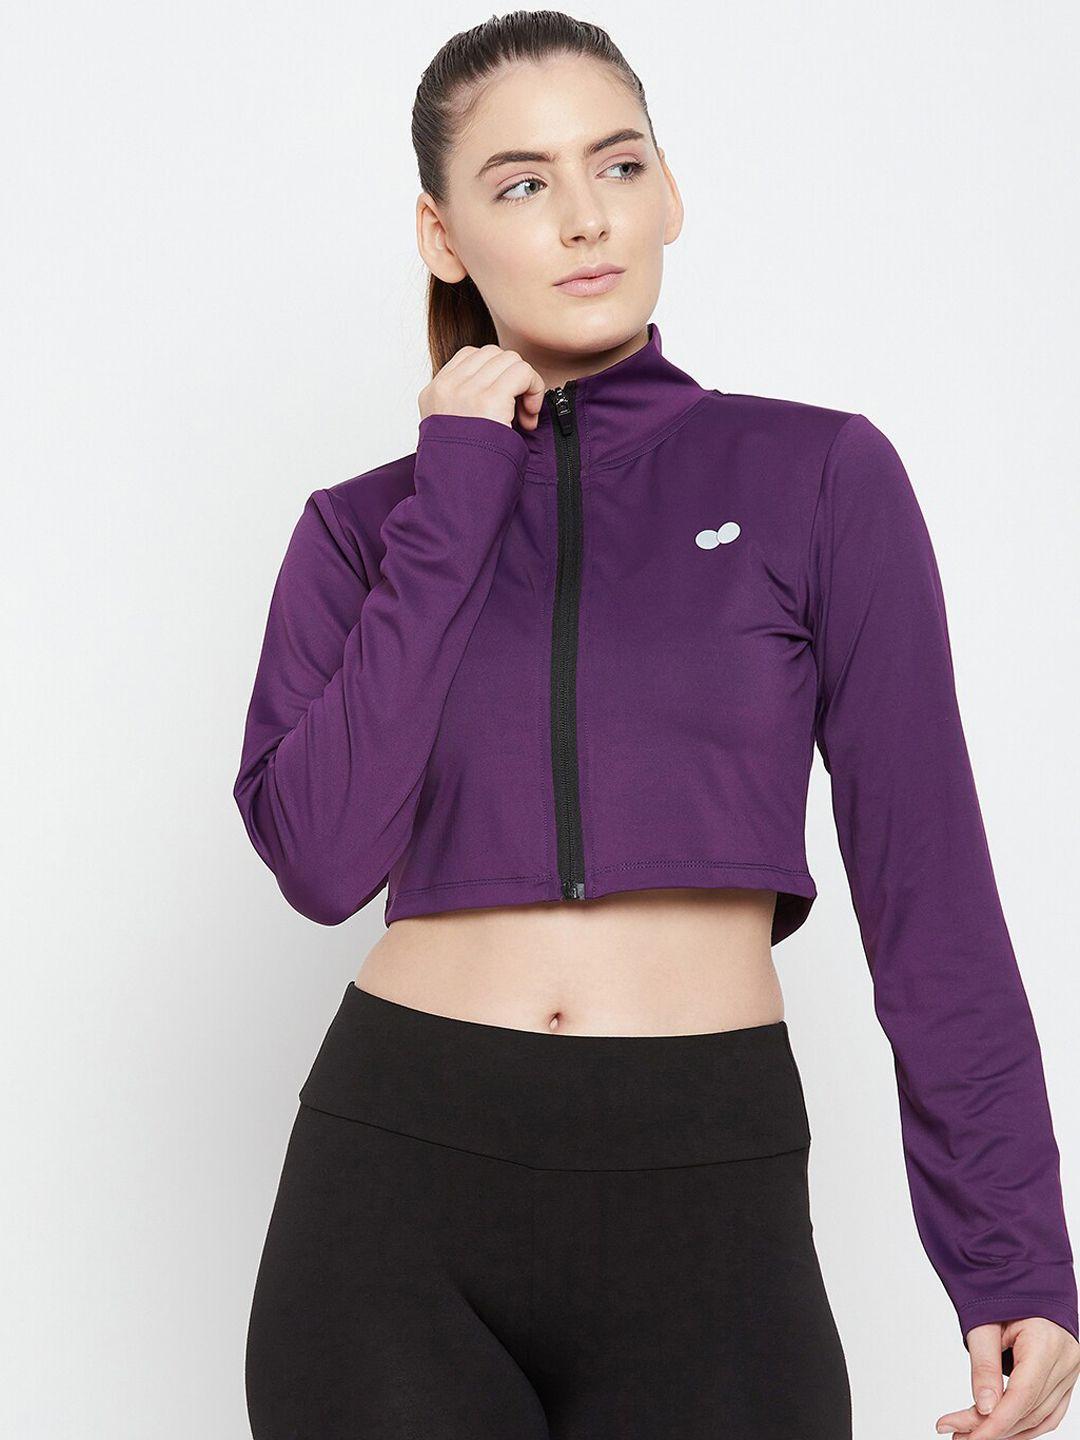 clovia-women-purple-crop-training-or-gym-snug-fit-sporty-jacket